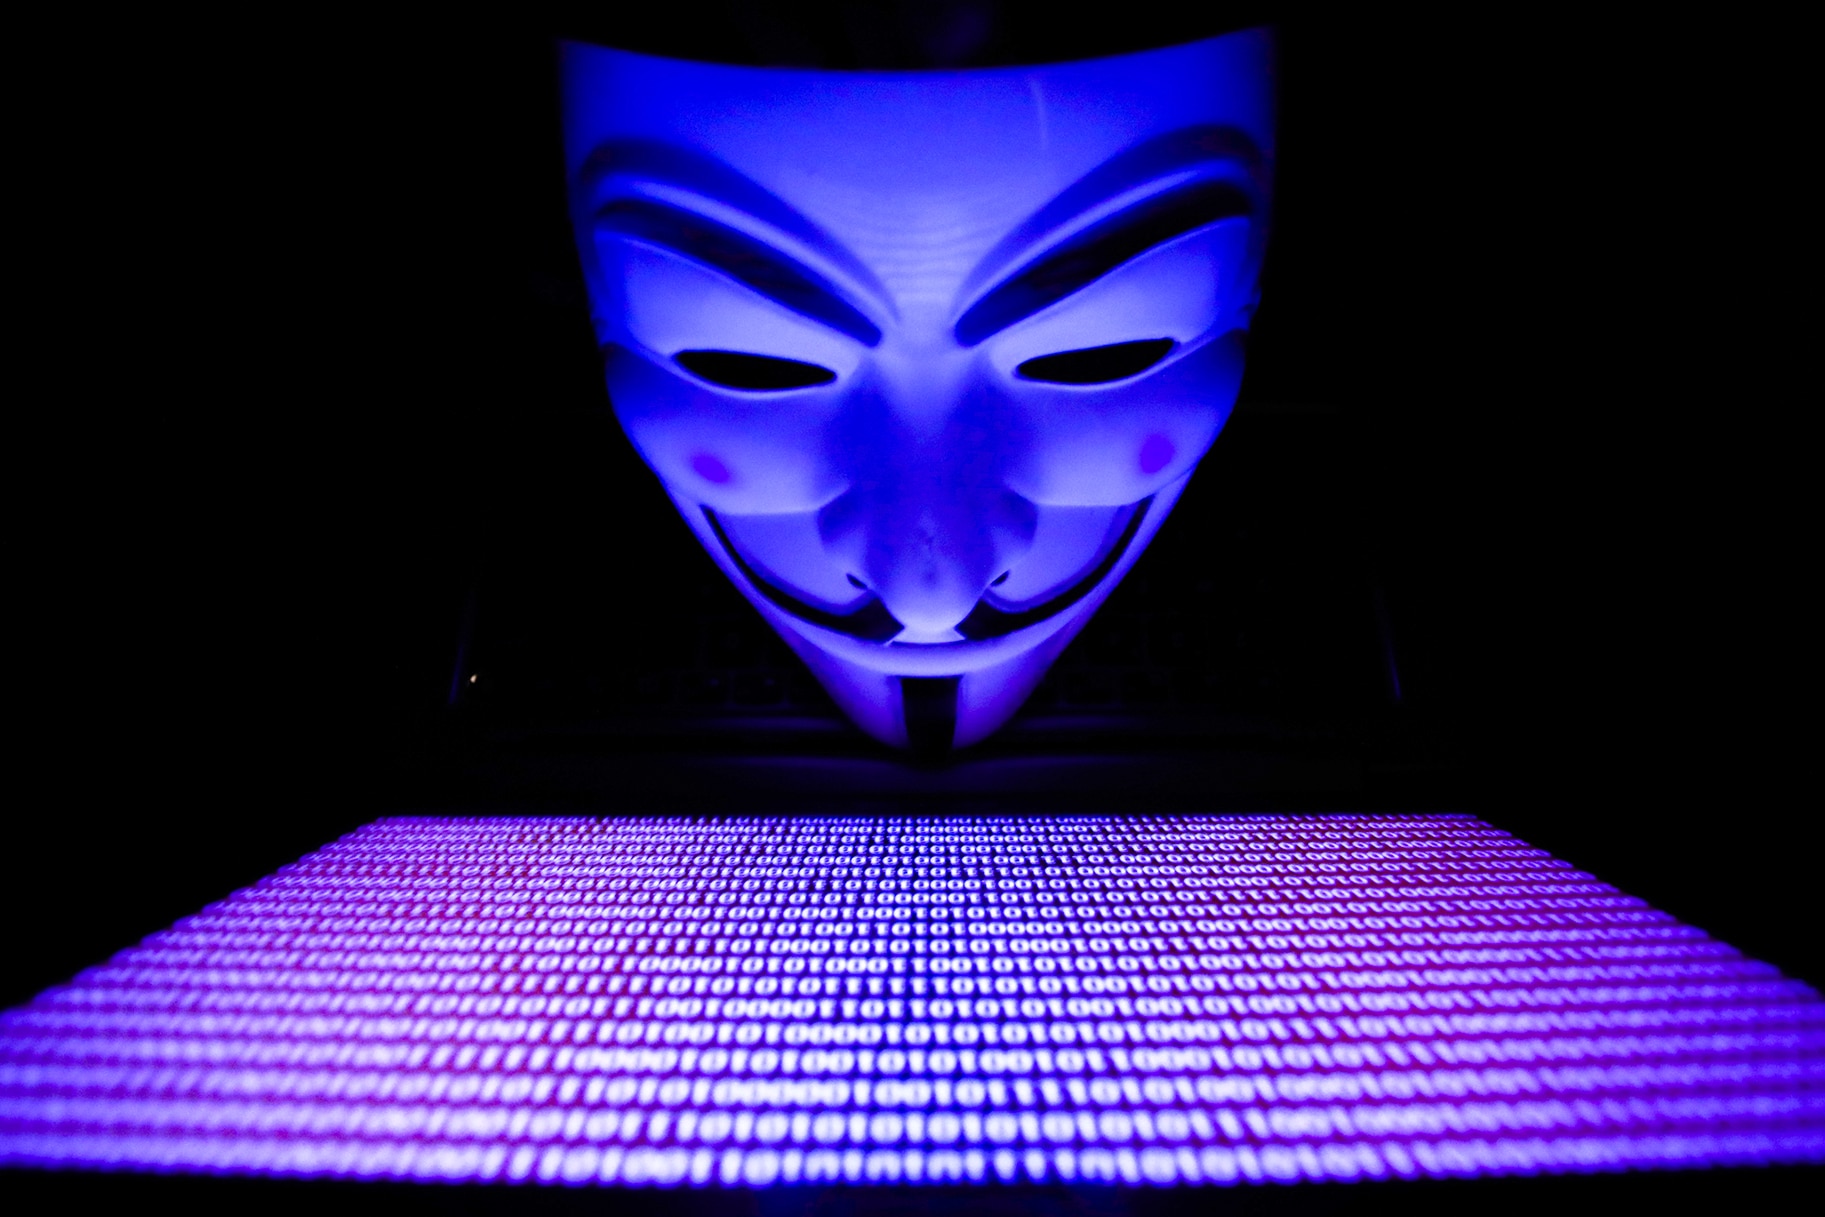 hacker anonymous